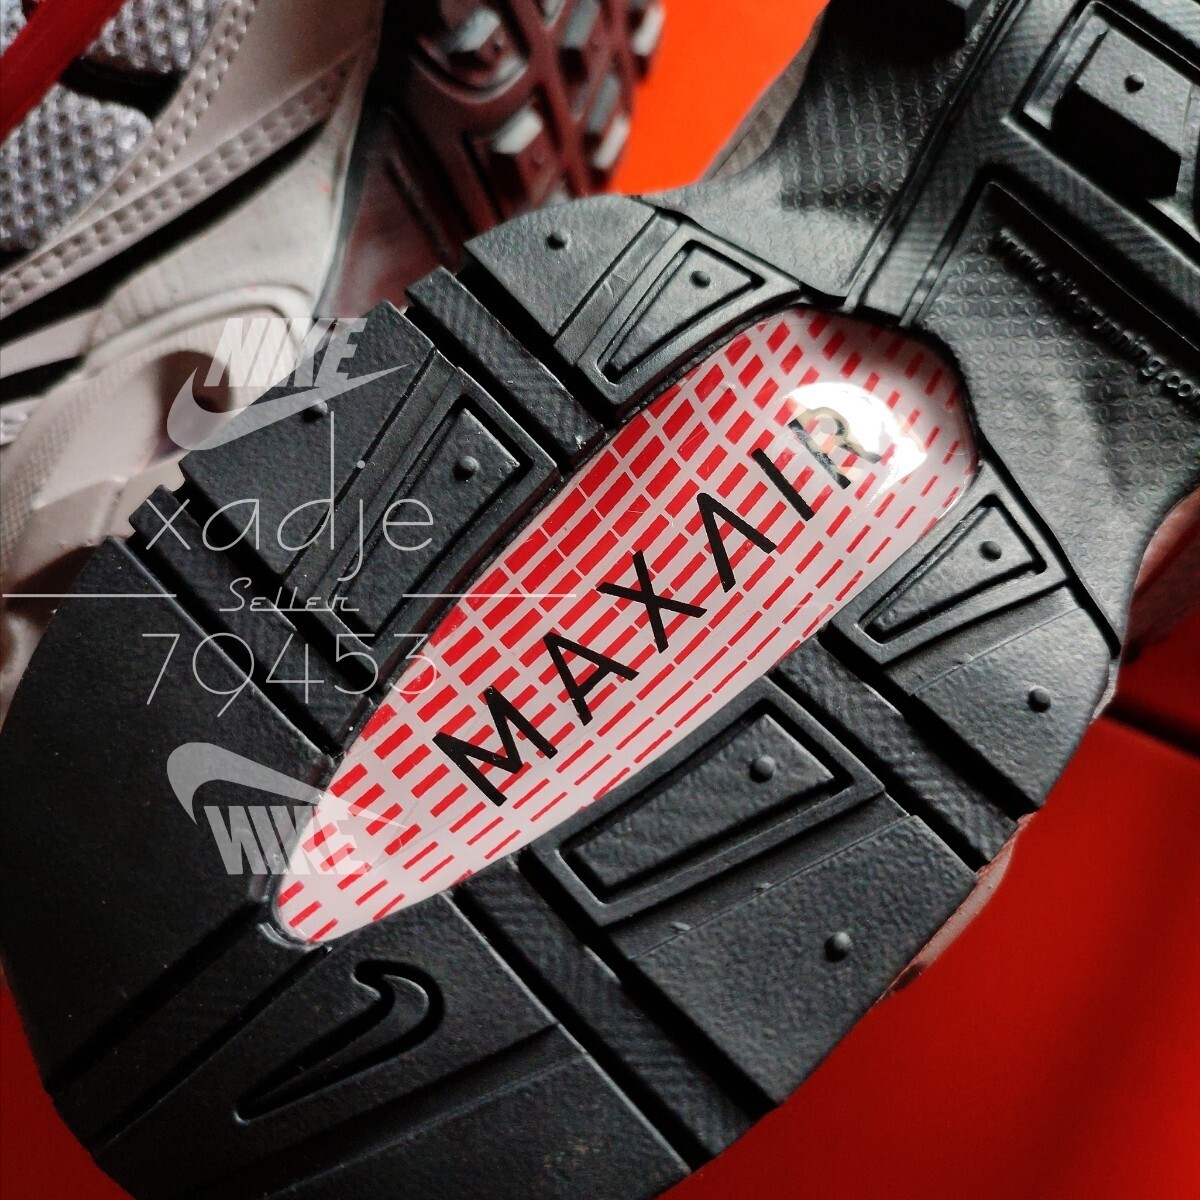  новый товар стандартный товар NIKE Nike AIR MAX TORCH 4 air max фонарь пепел серый красный красный чёрный градация 25.5cm US7.5 с коробкой 